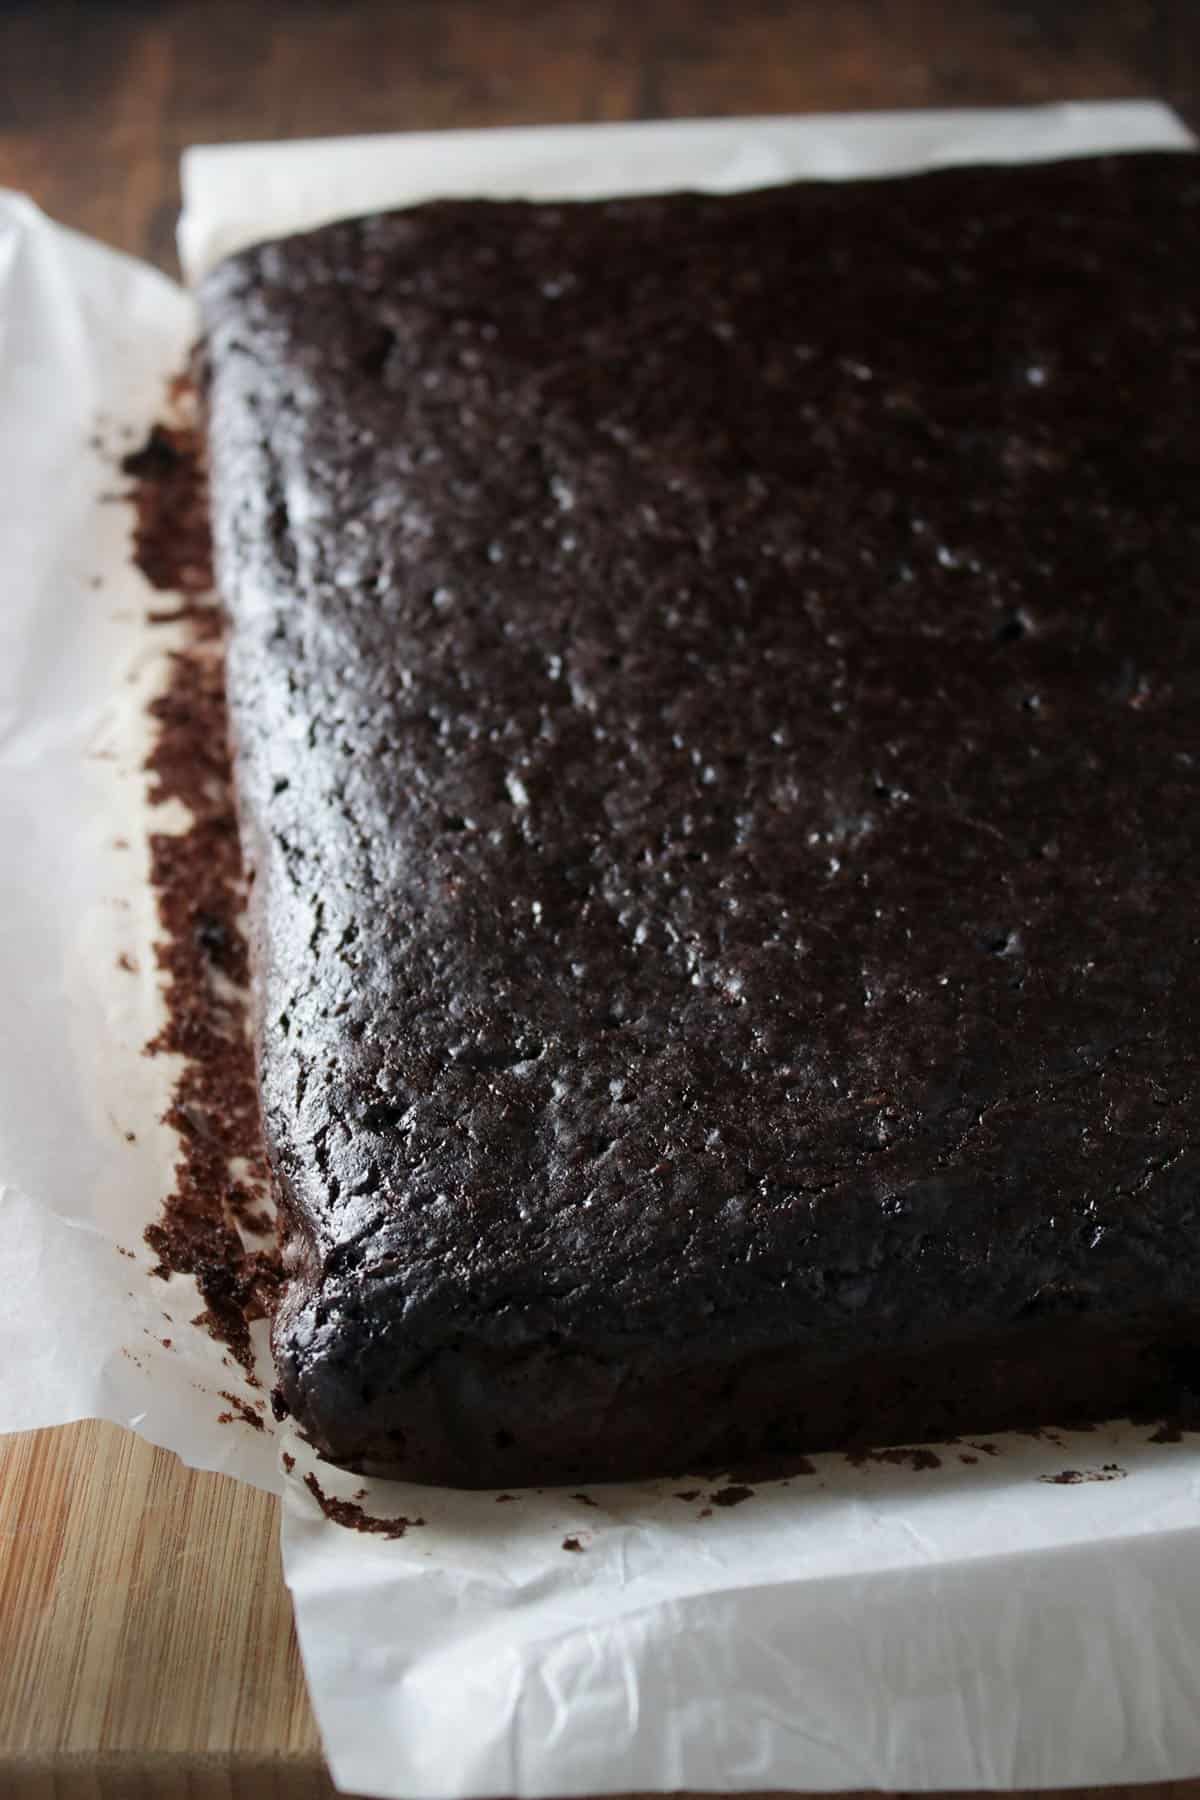 The freshly baked chocolate banana sheet cake.